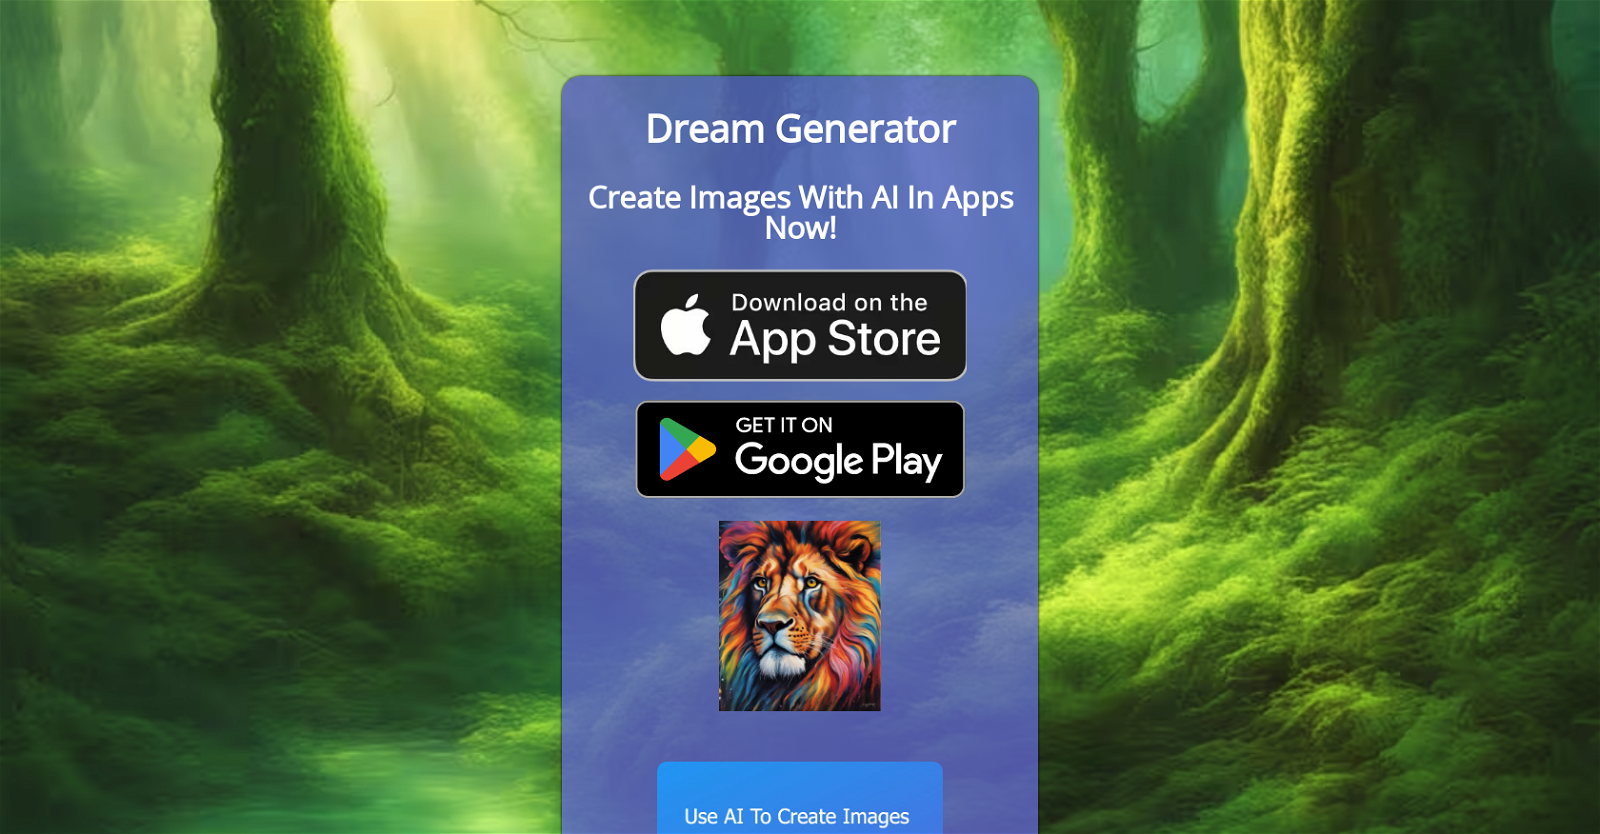 DreamGenerator.ai website